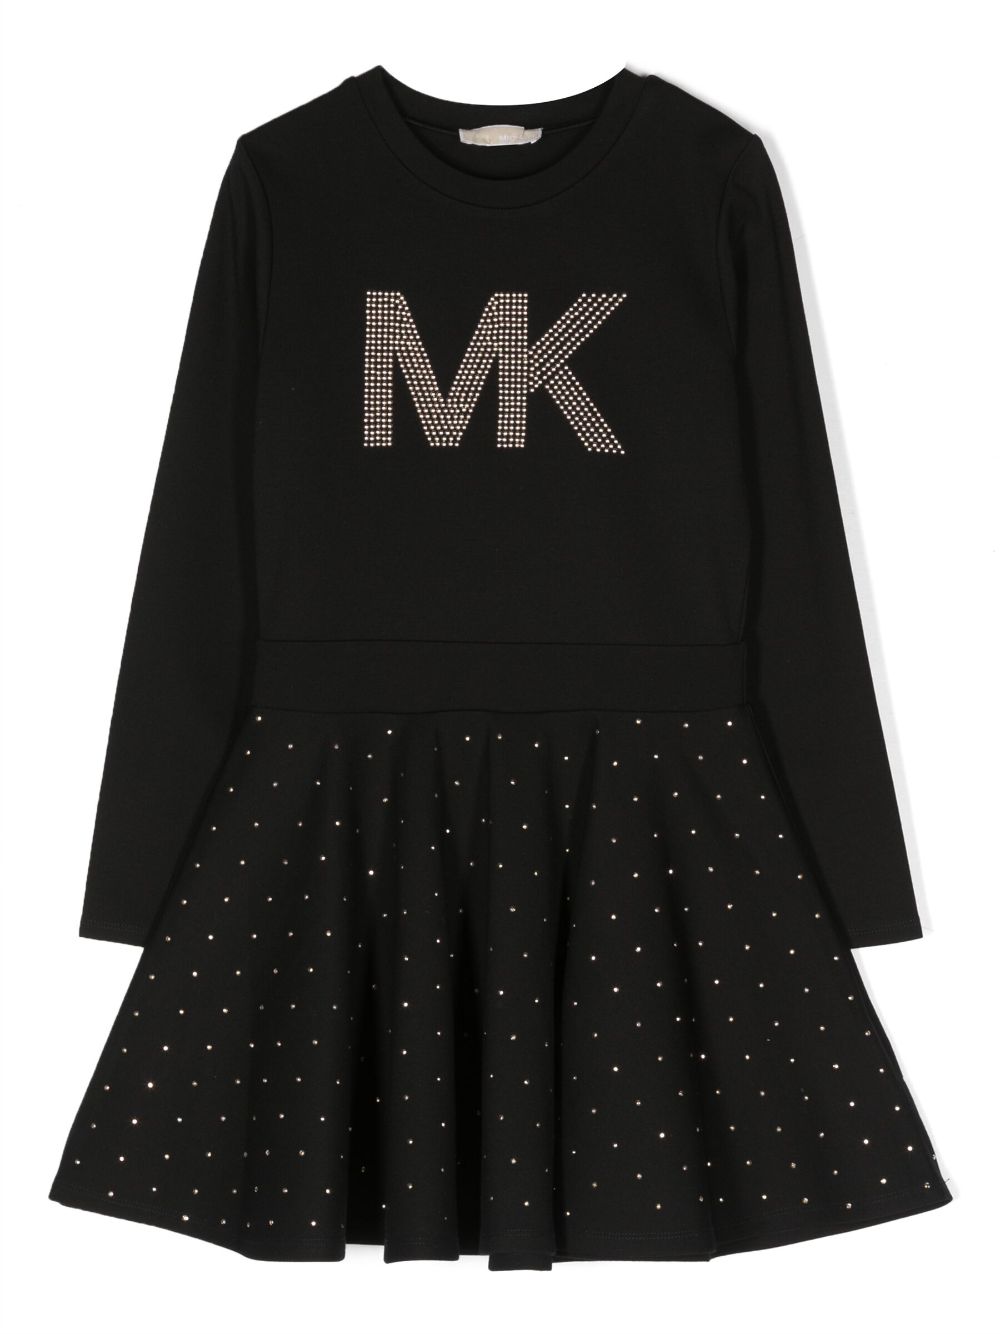 Michael Kors Kids logo-print stud-embellished dress - Black